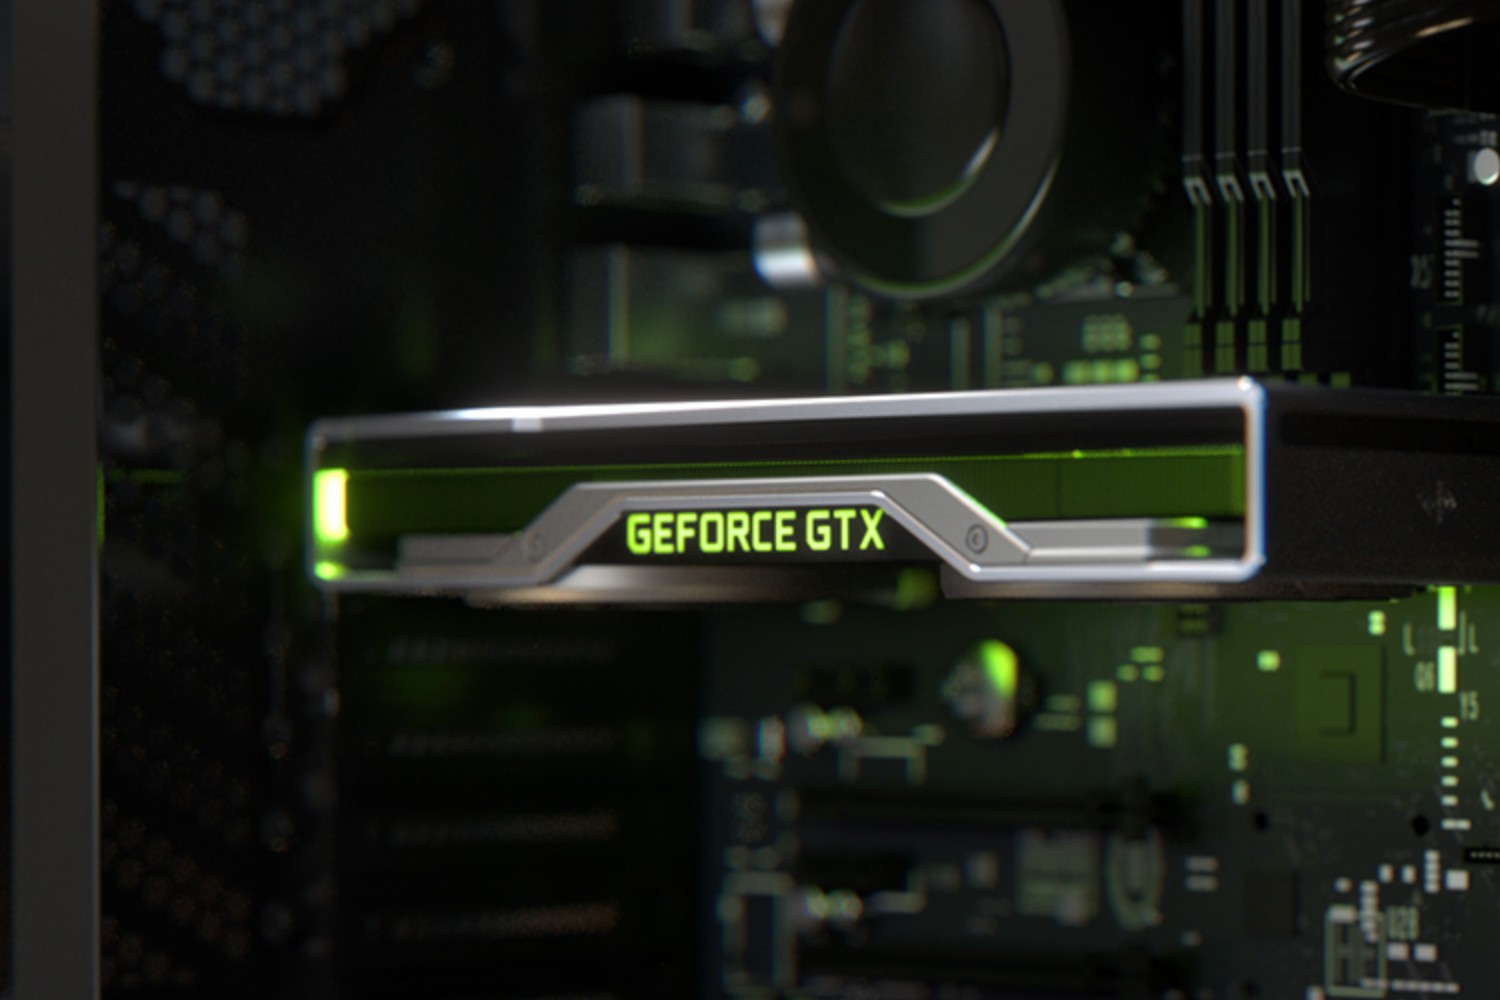 NVIDIA GeForce GTX 1660 Super Desktop GPU - Benchmarks and Specs -   Tech